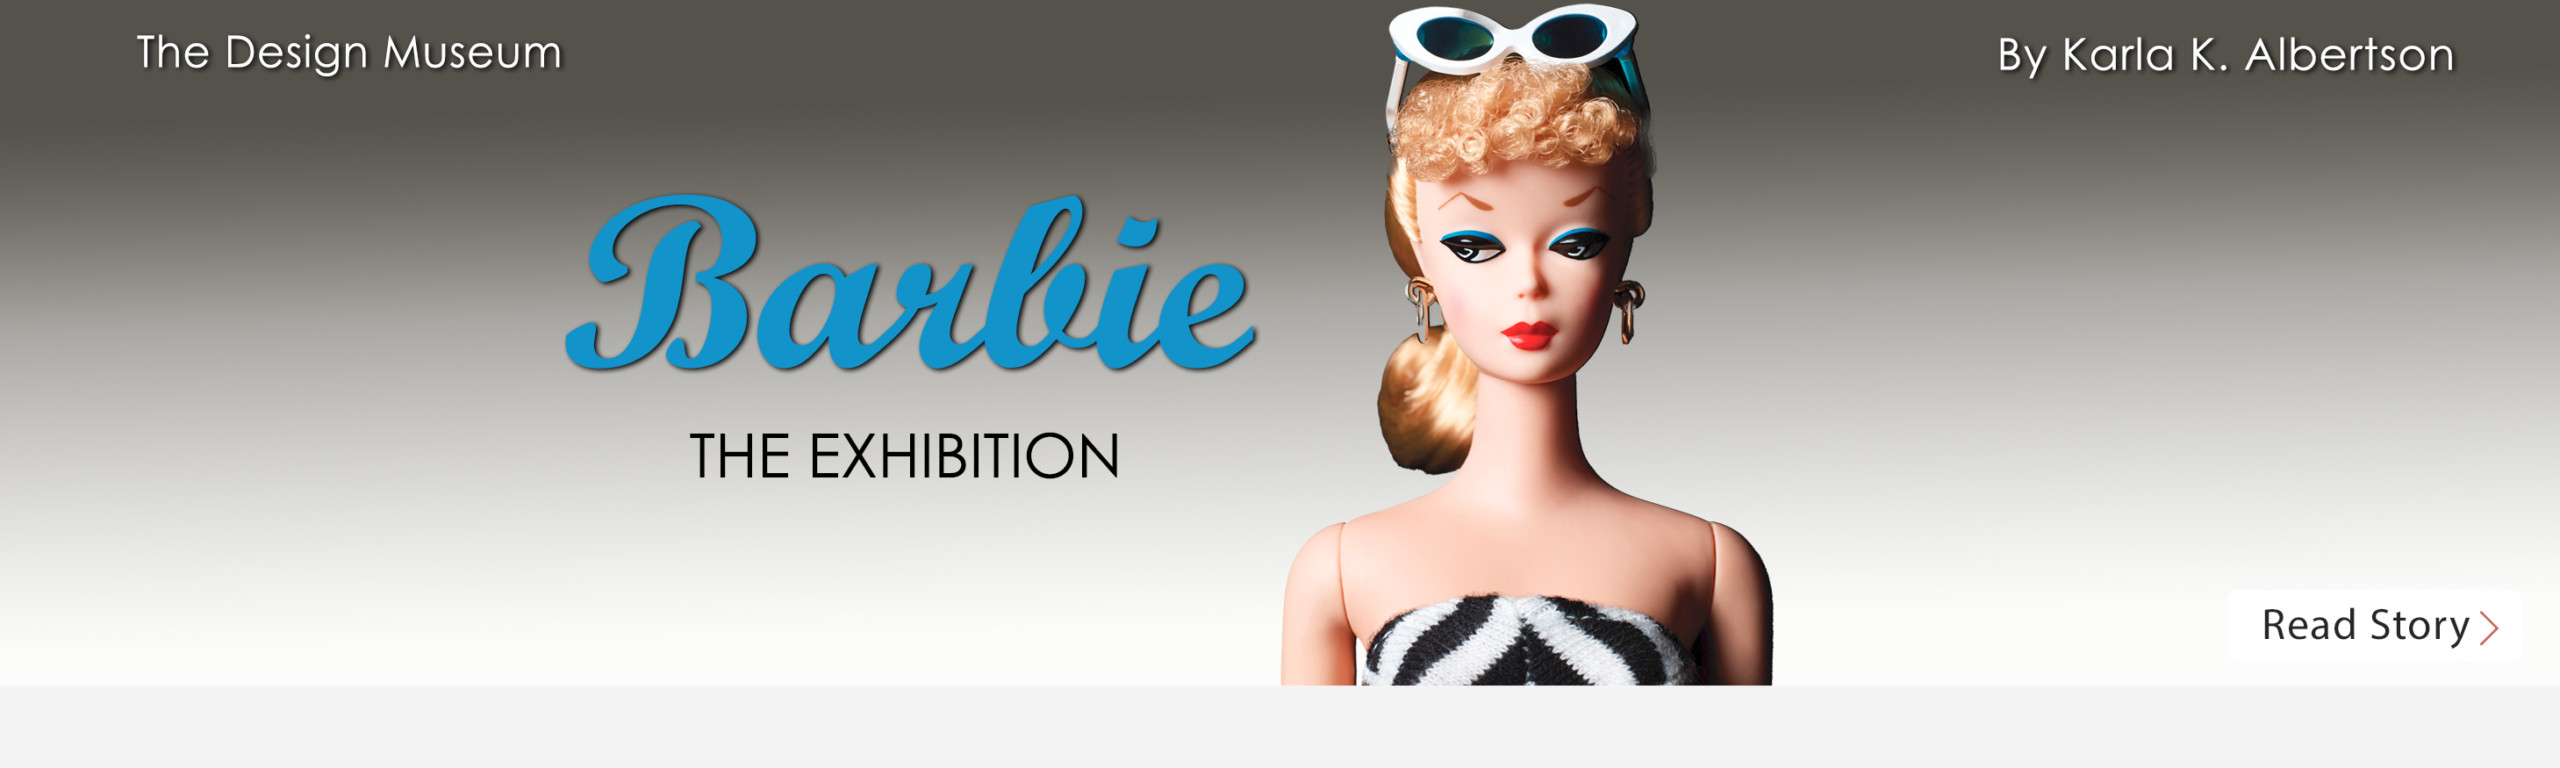 The Design Museum—Barbie: The Exhibition